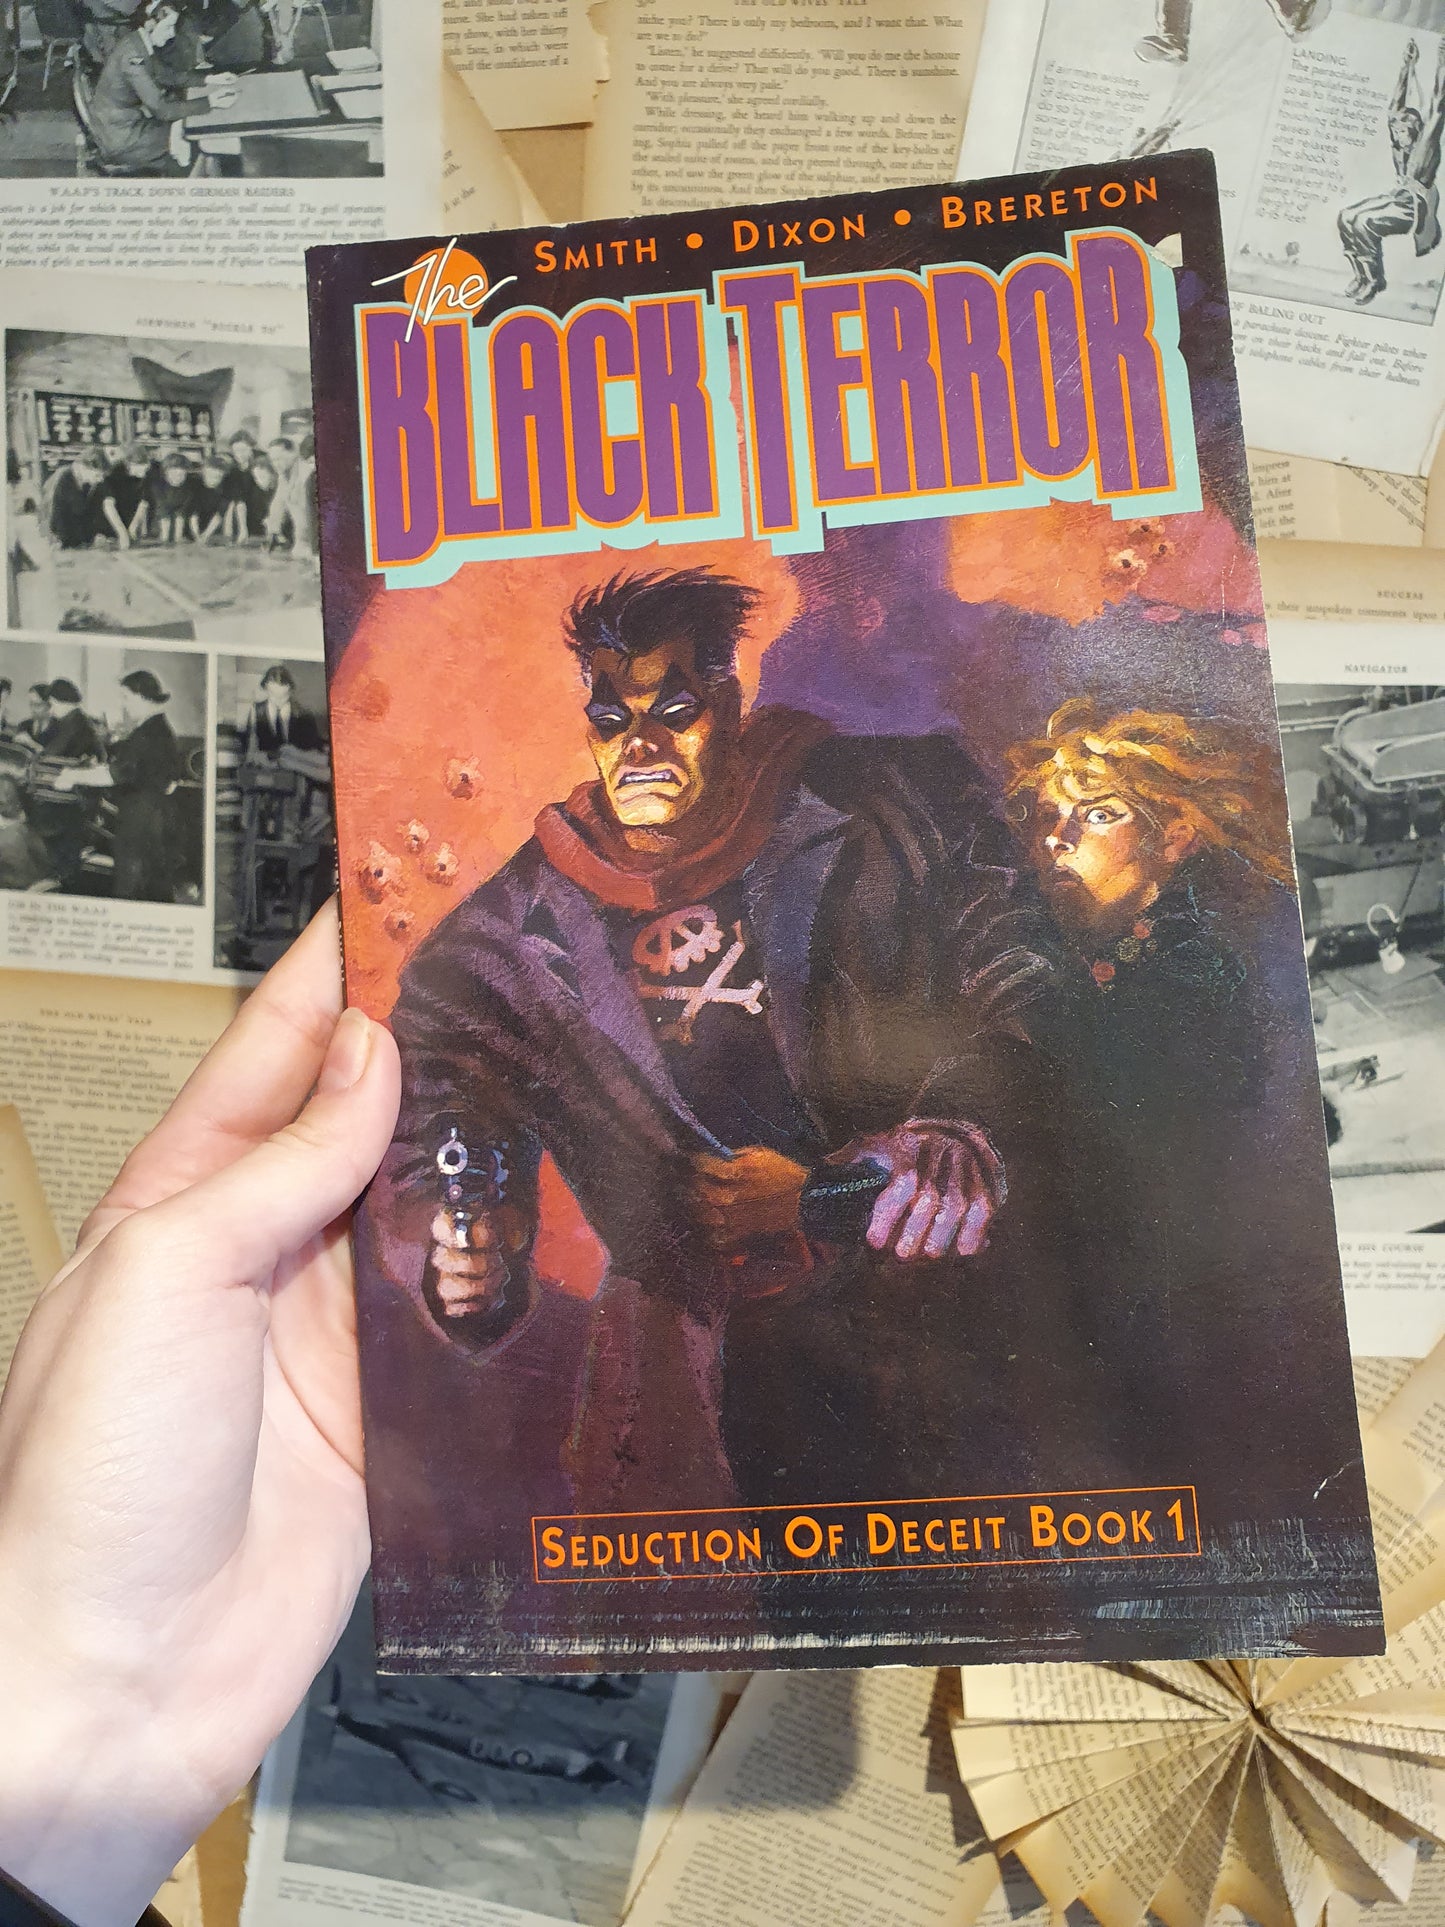 The Black Terror: Seduction of Deceit Book 1 by Smith, Dixon... (1989)